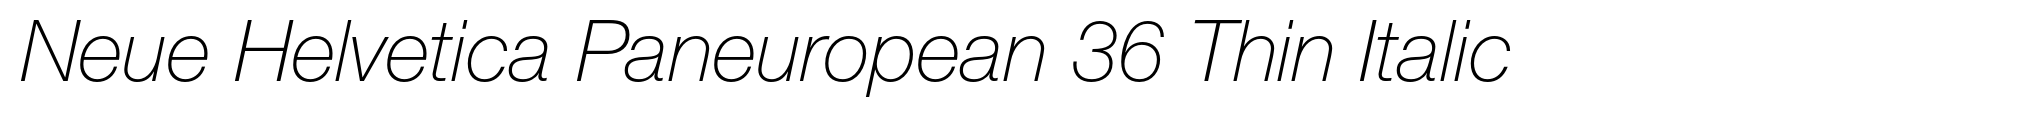 Neue Helvetica Paneuropean 36 Thin Italic image